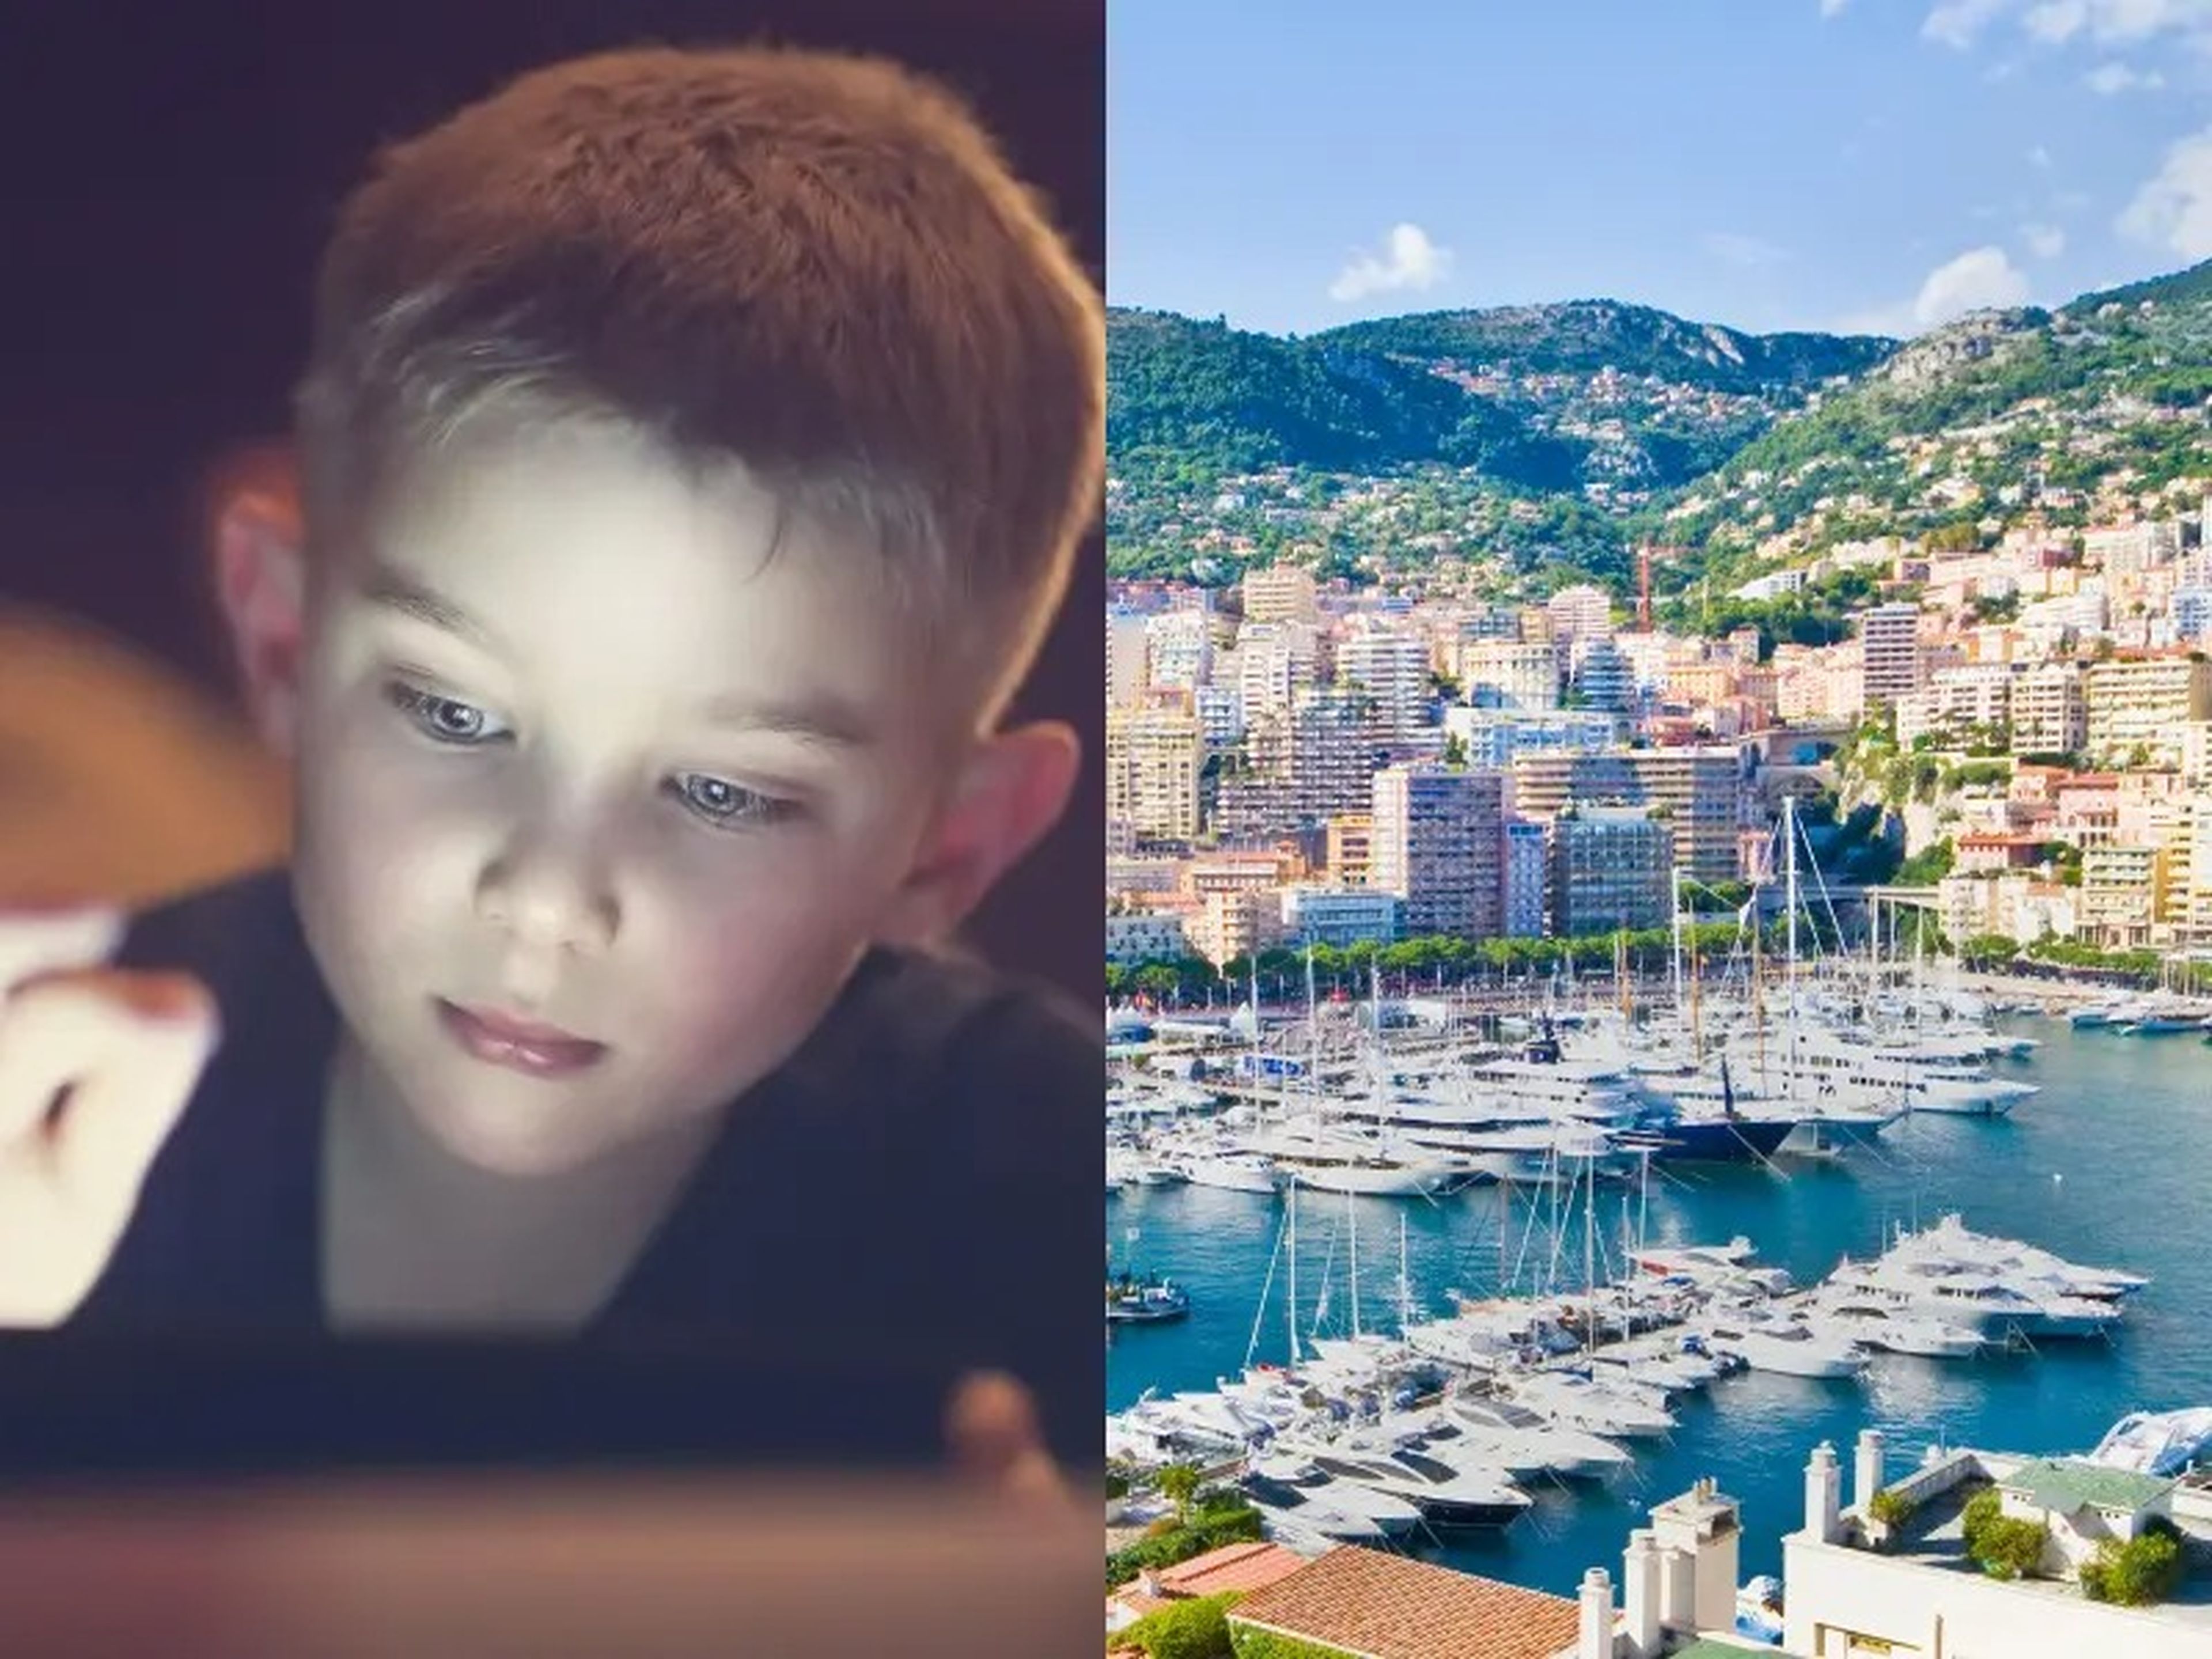 Boy on tablet and Monaco Harbor.